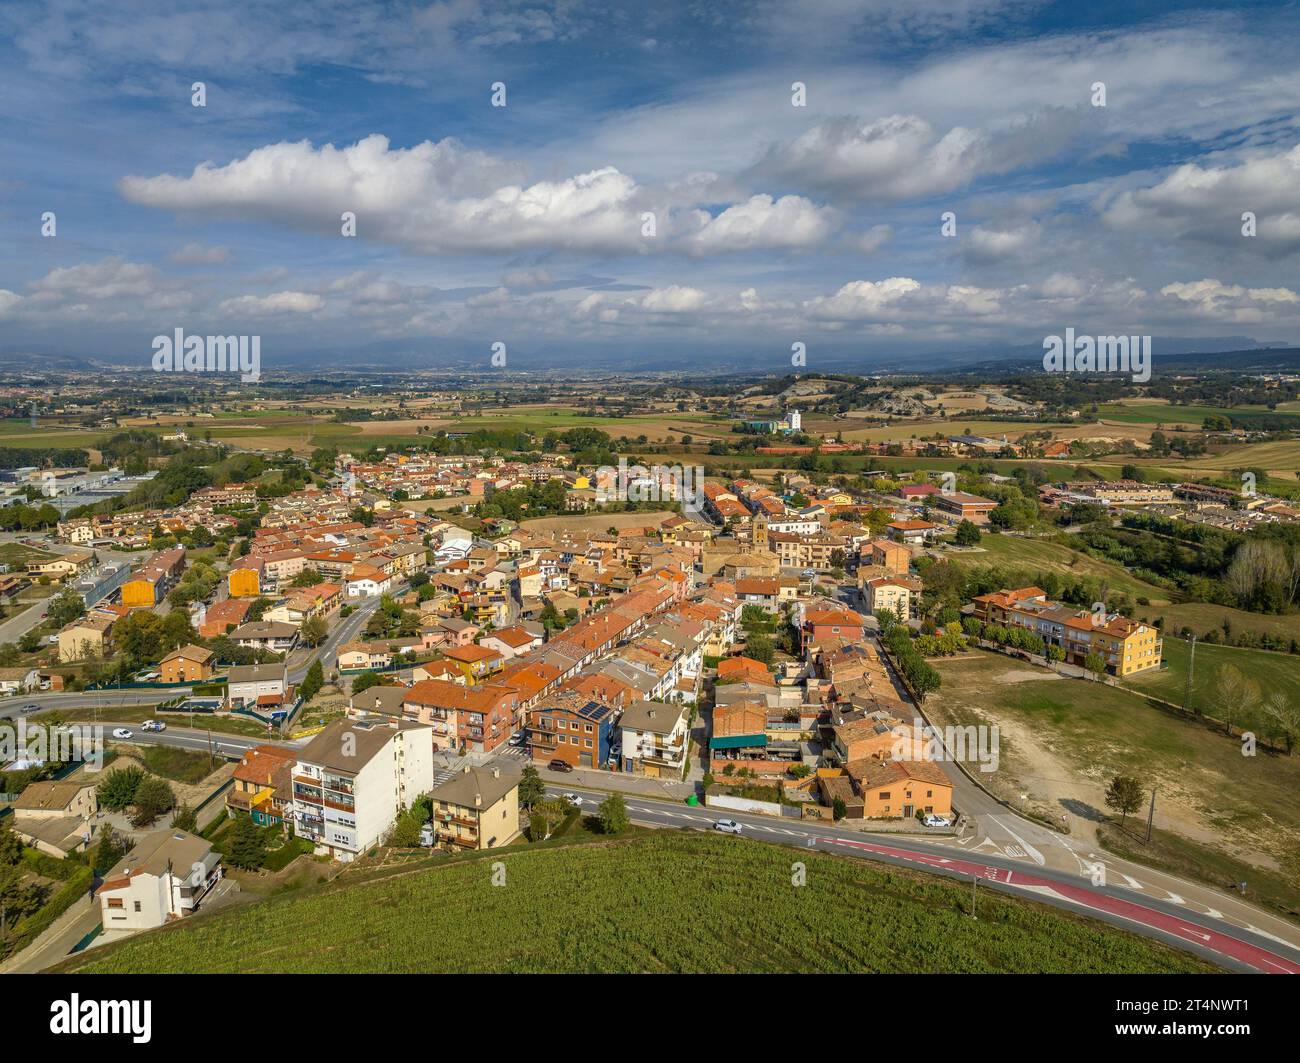 Vista aerea della città di Santa Eugènia de Berga, nella regione di Plana de Vic. Osona, Barcellona, Catalogna Spagna ESP: Vista aérea sta Eugènia de Berga Foto Stock